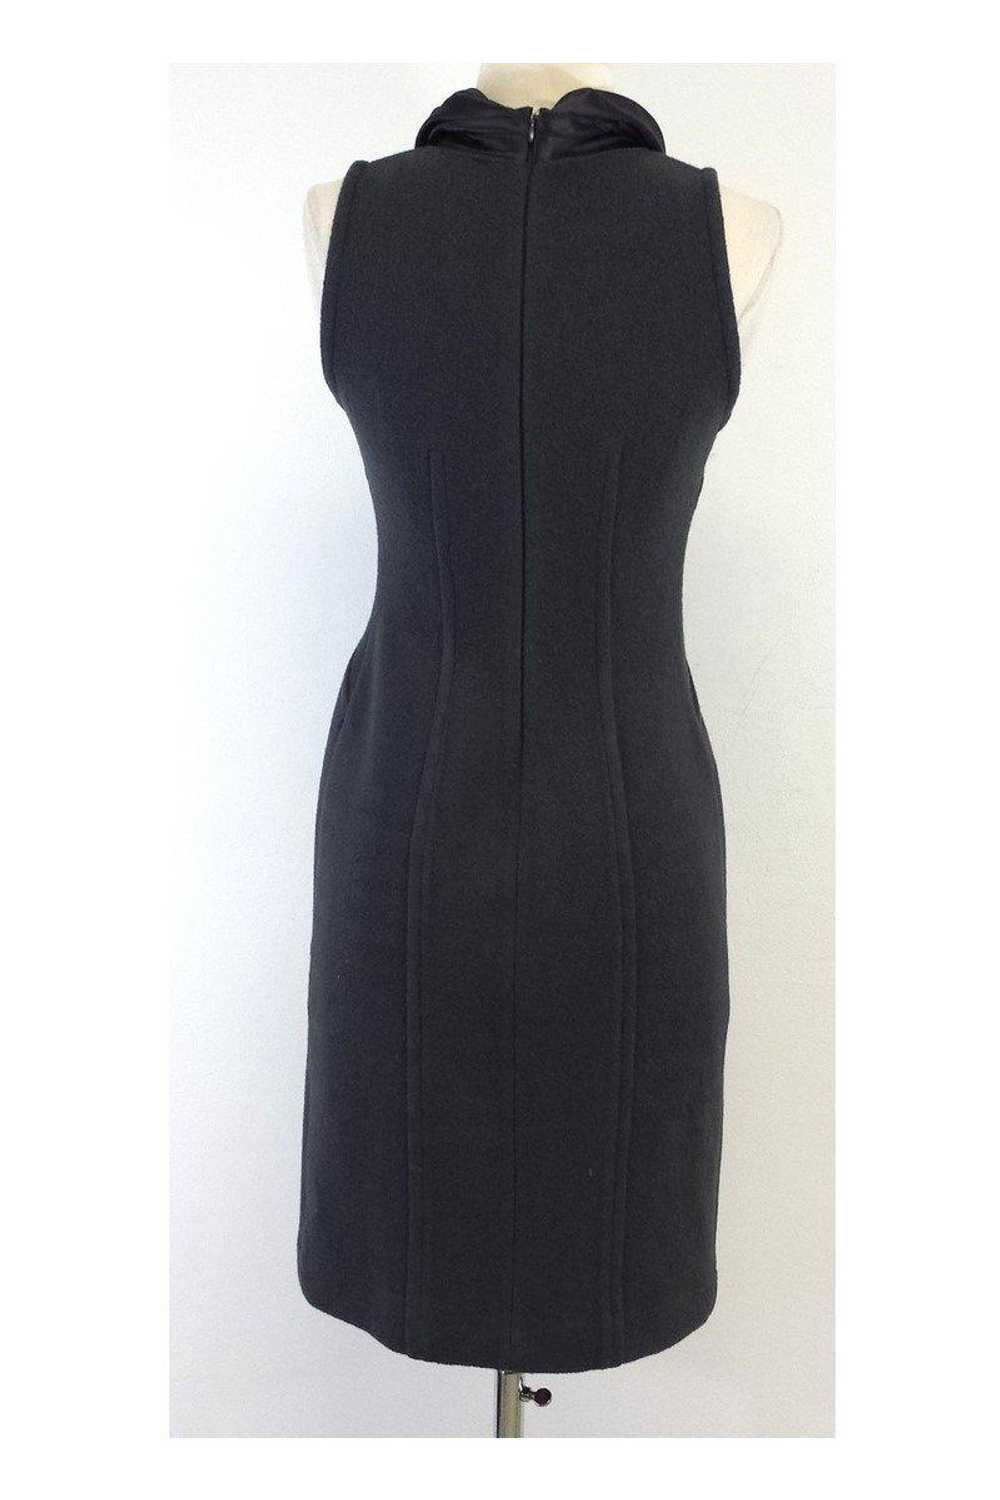 Giorgio Armani - Grey Wool Sleeveless Dress Sz 4 - image 3